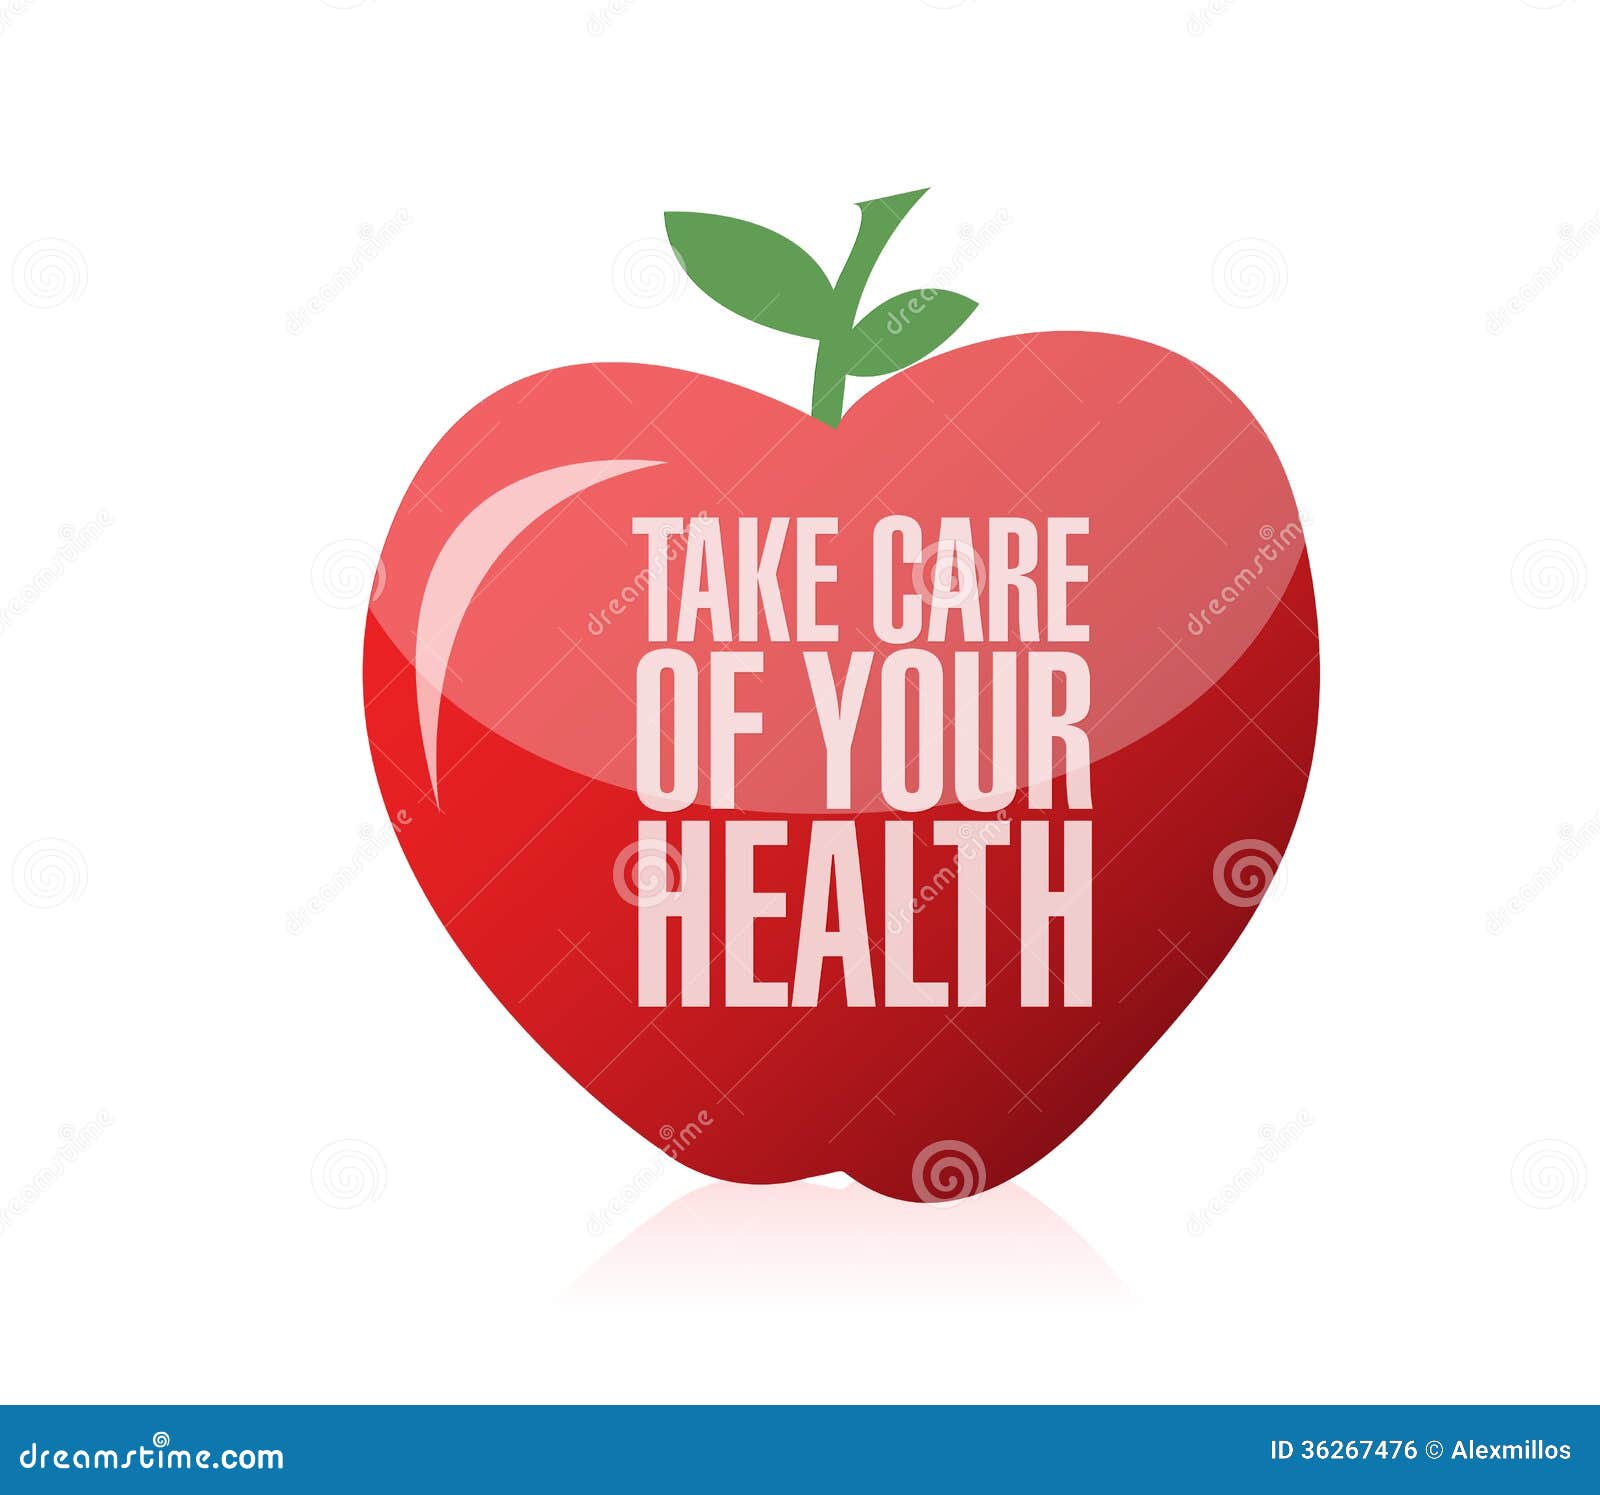 Take care of your health artinya